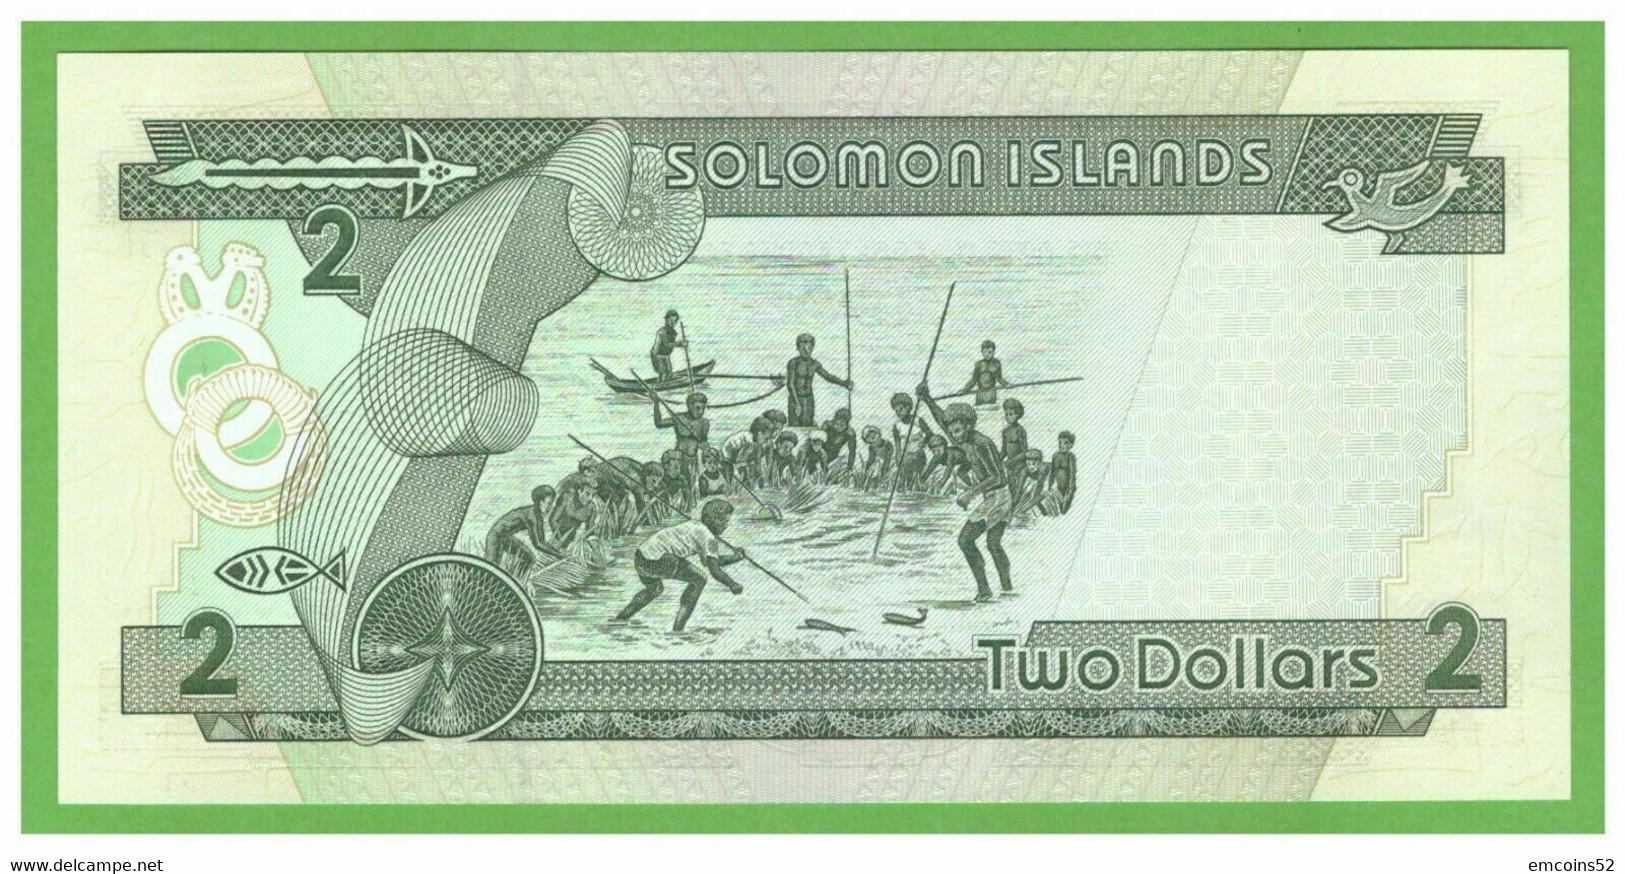 SOLOMON ISLANDS 2 DOLLARS 1997  P-18  UNC - Isla Salomon